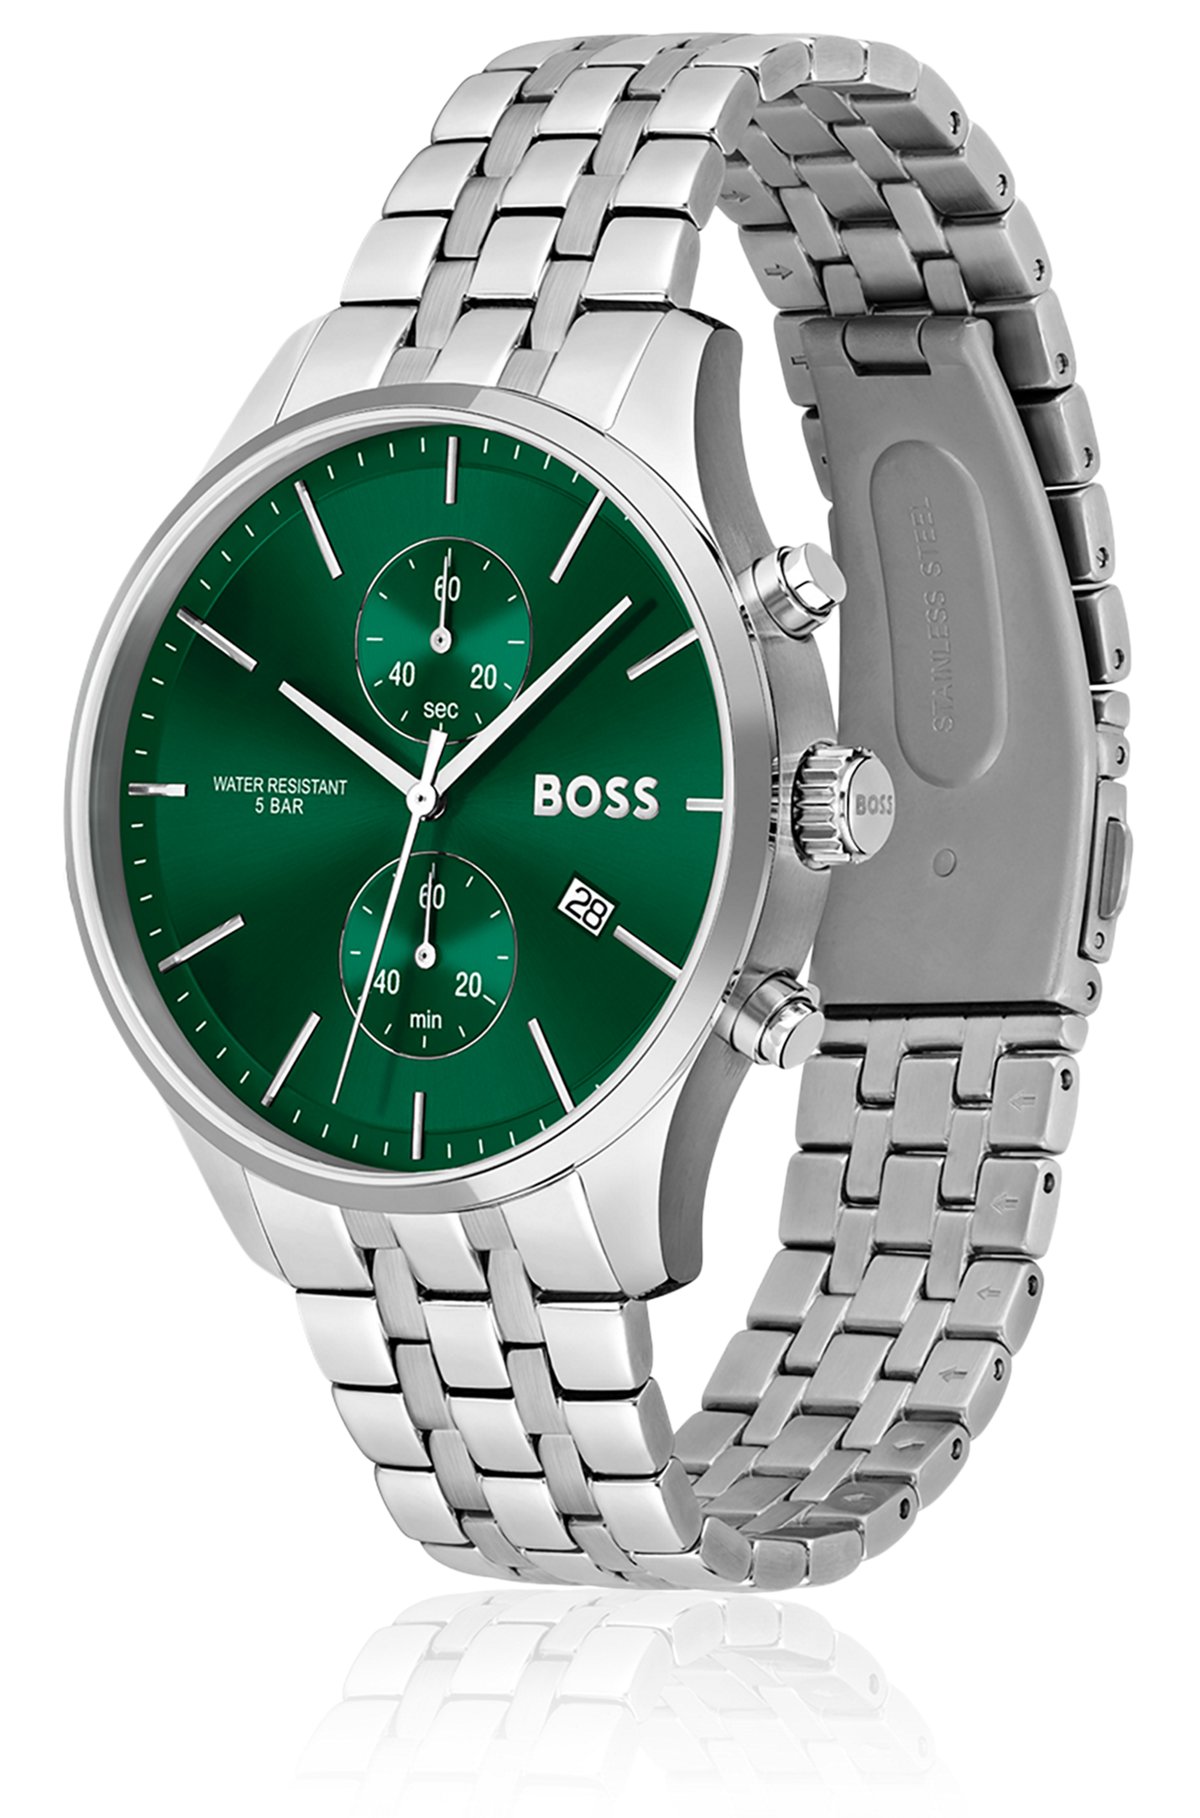 BOSS - Link-bracelet watch with green dial